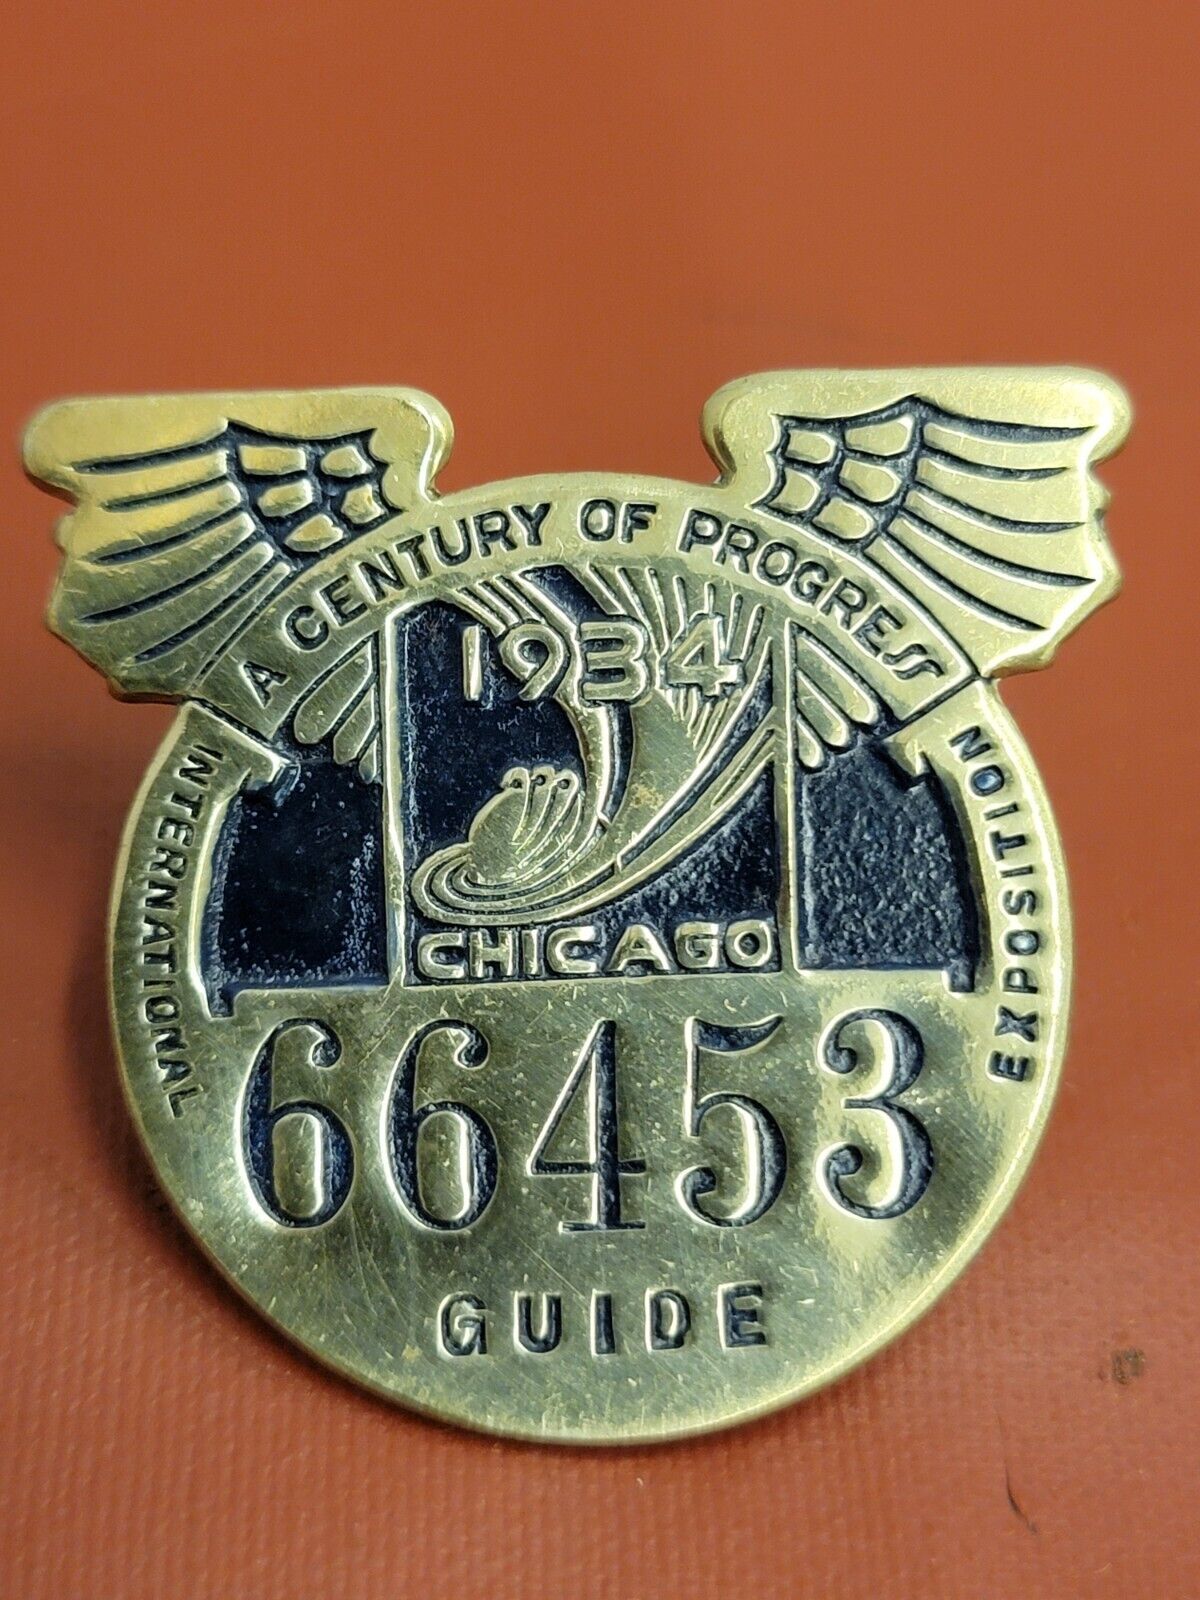 1934 CENTURY OF PROGRESS CHICAGO WORLDS FAIR Guide Pin  RARE